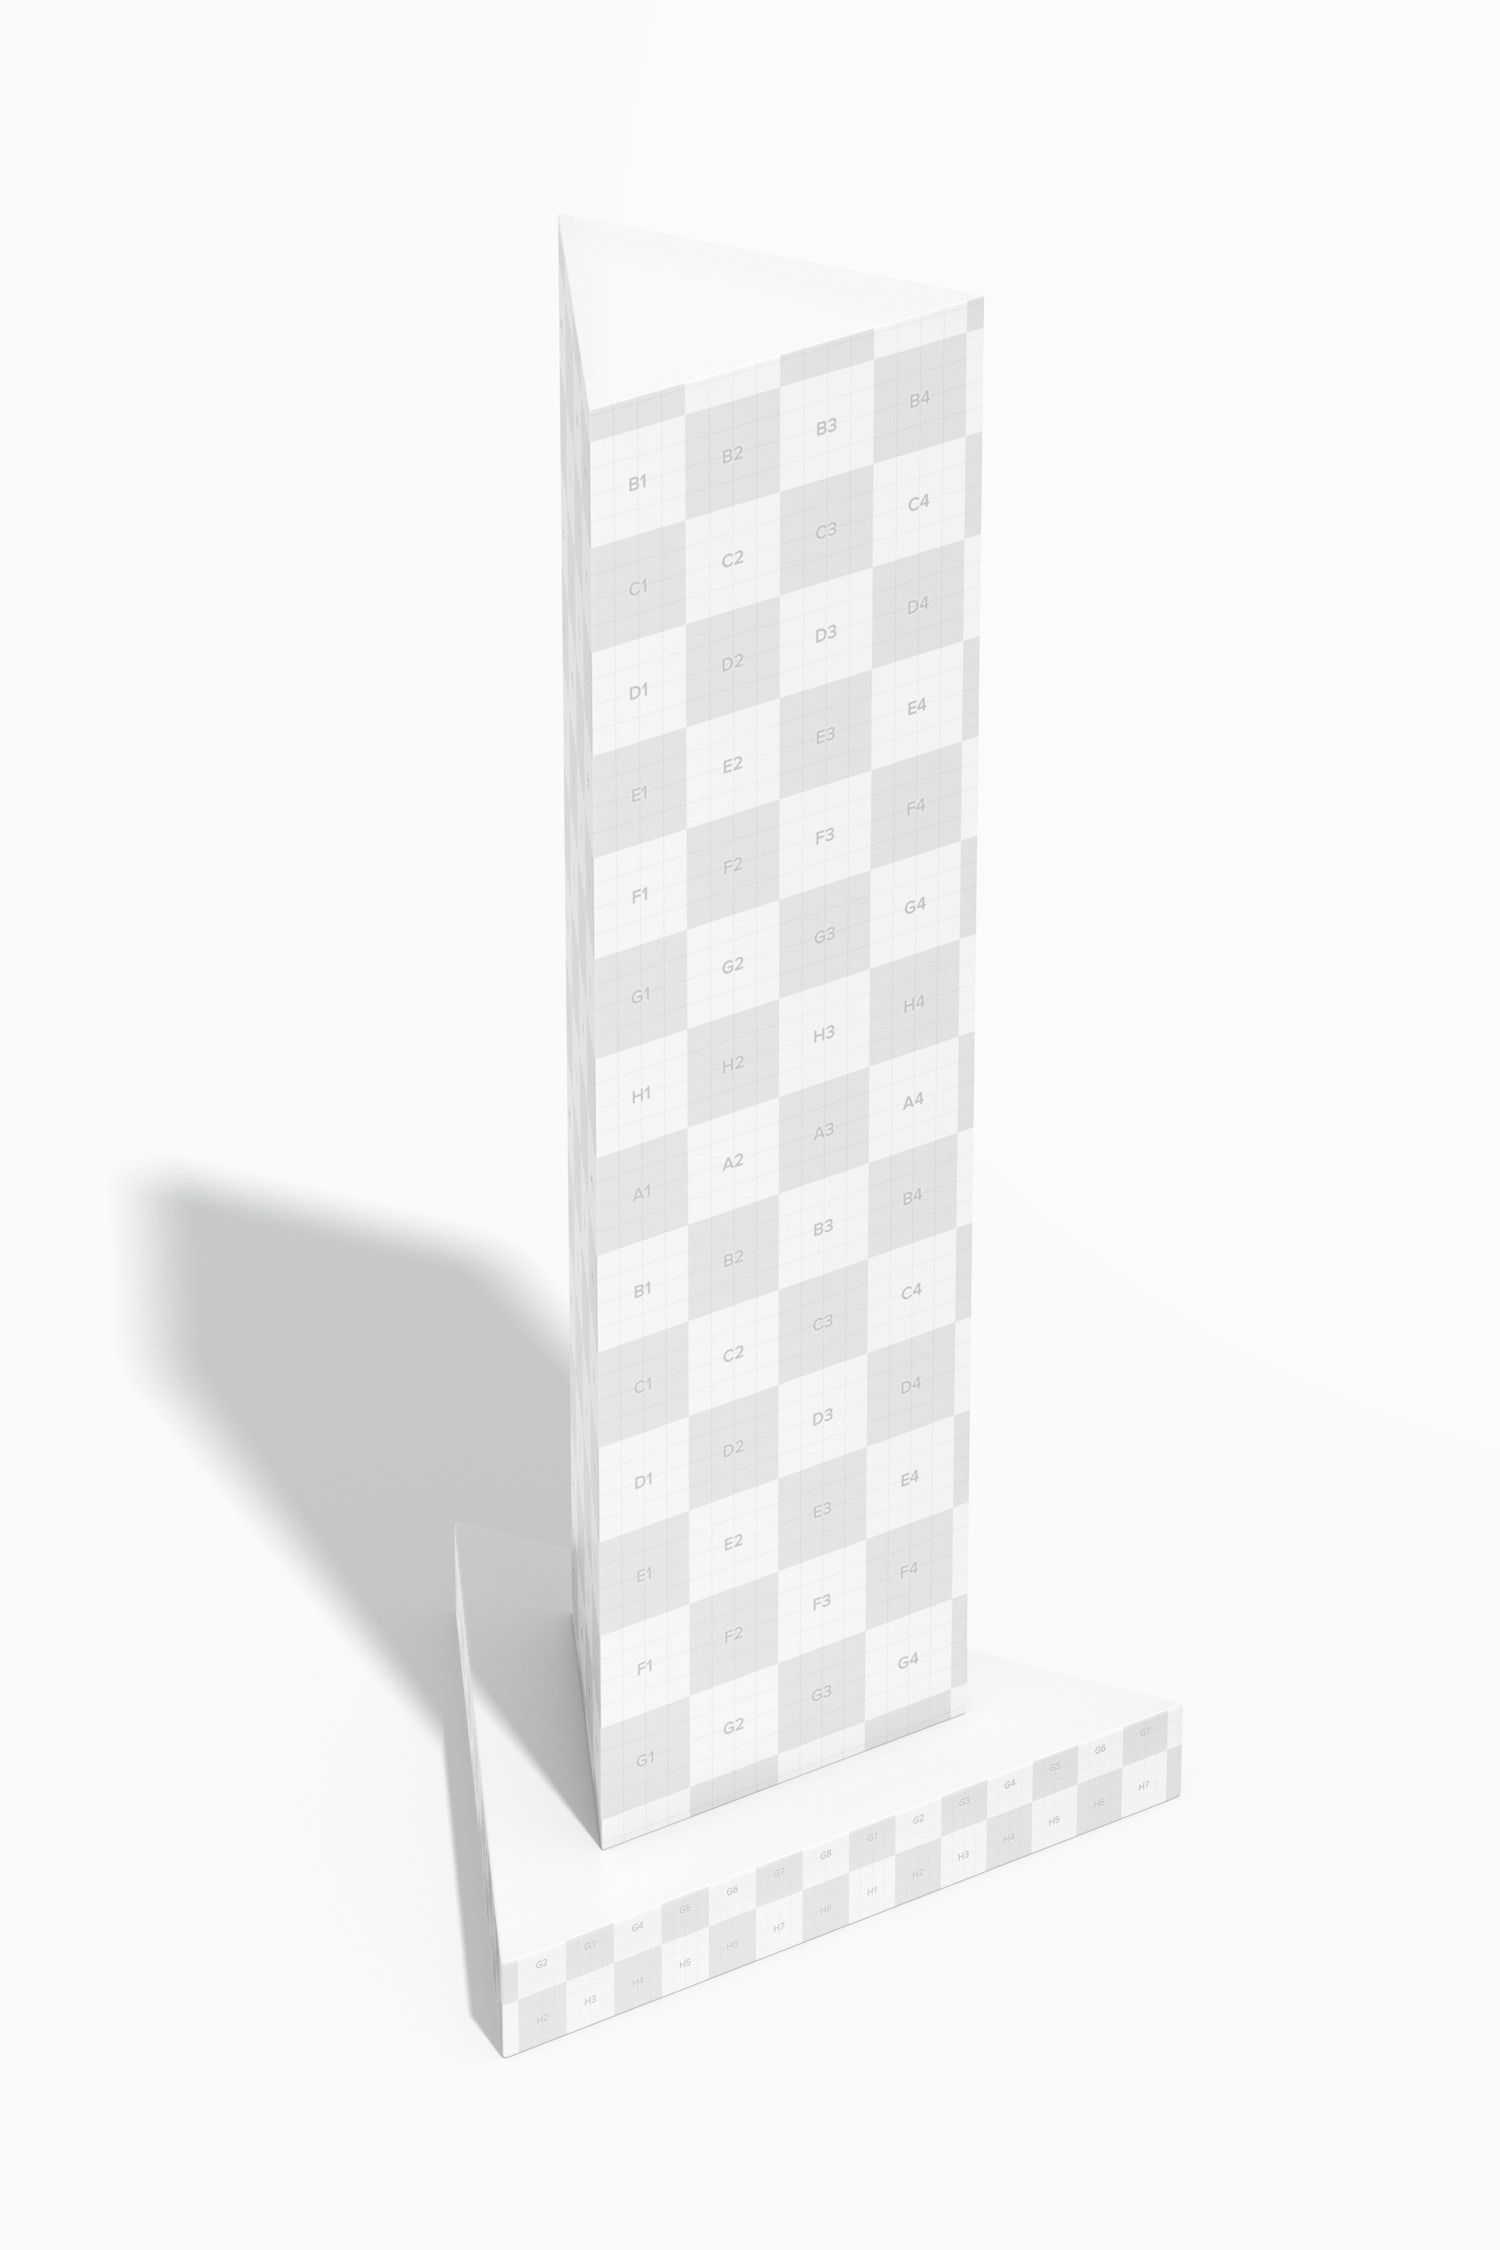 Three Sided Cardboard Display Mockup, Perspective